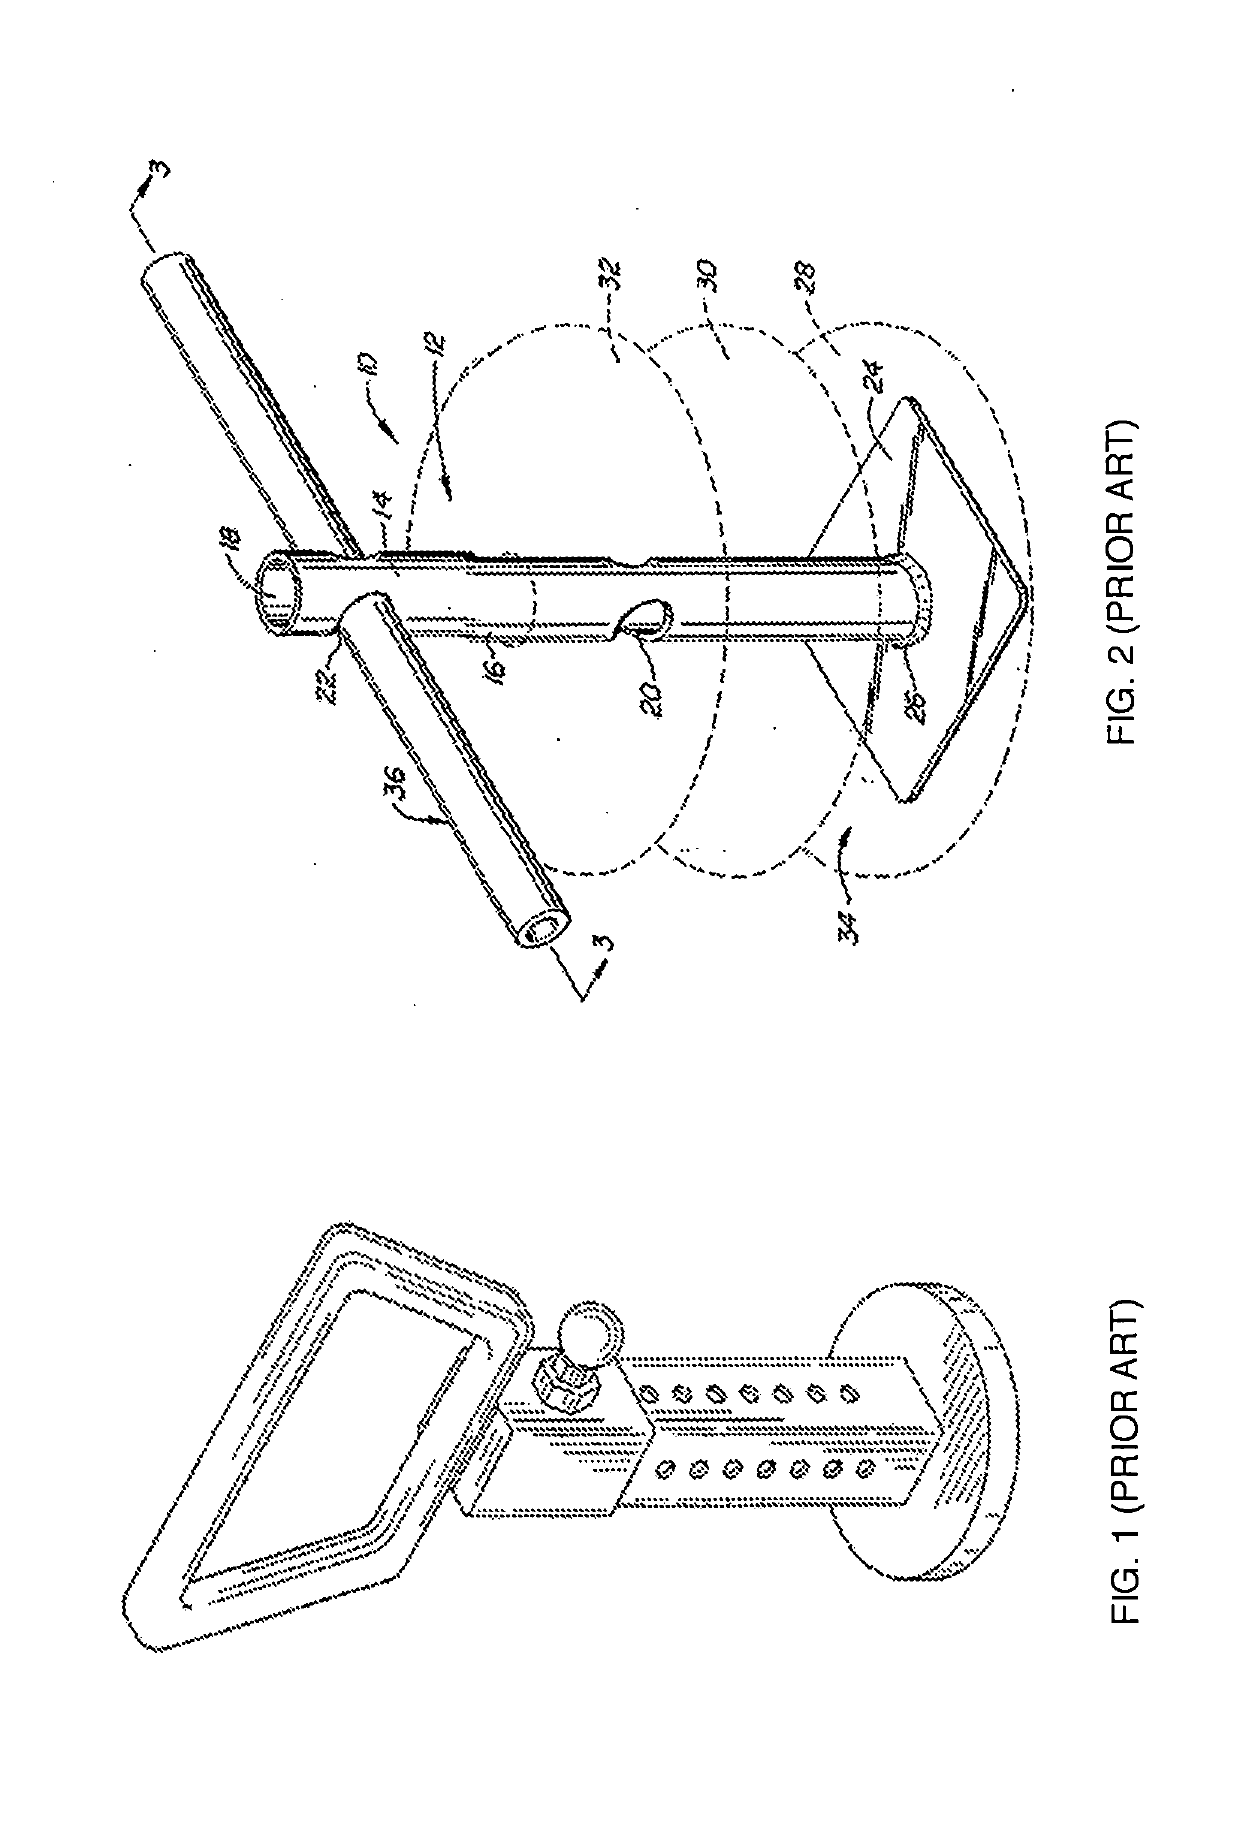 Deadlift bar apparatus and method